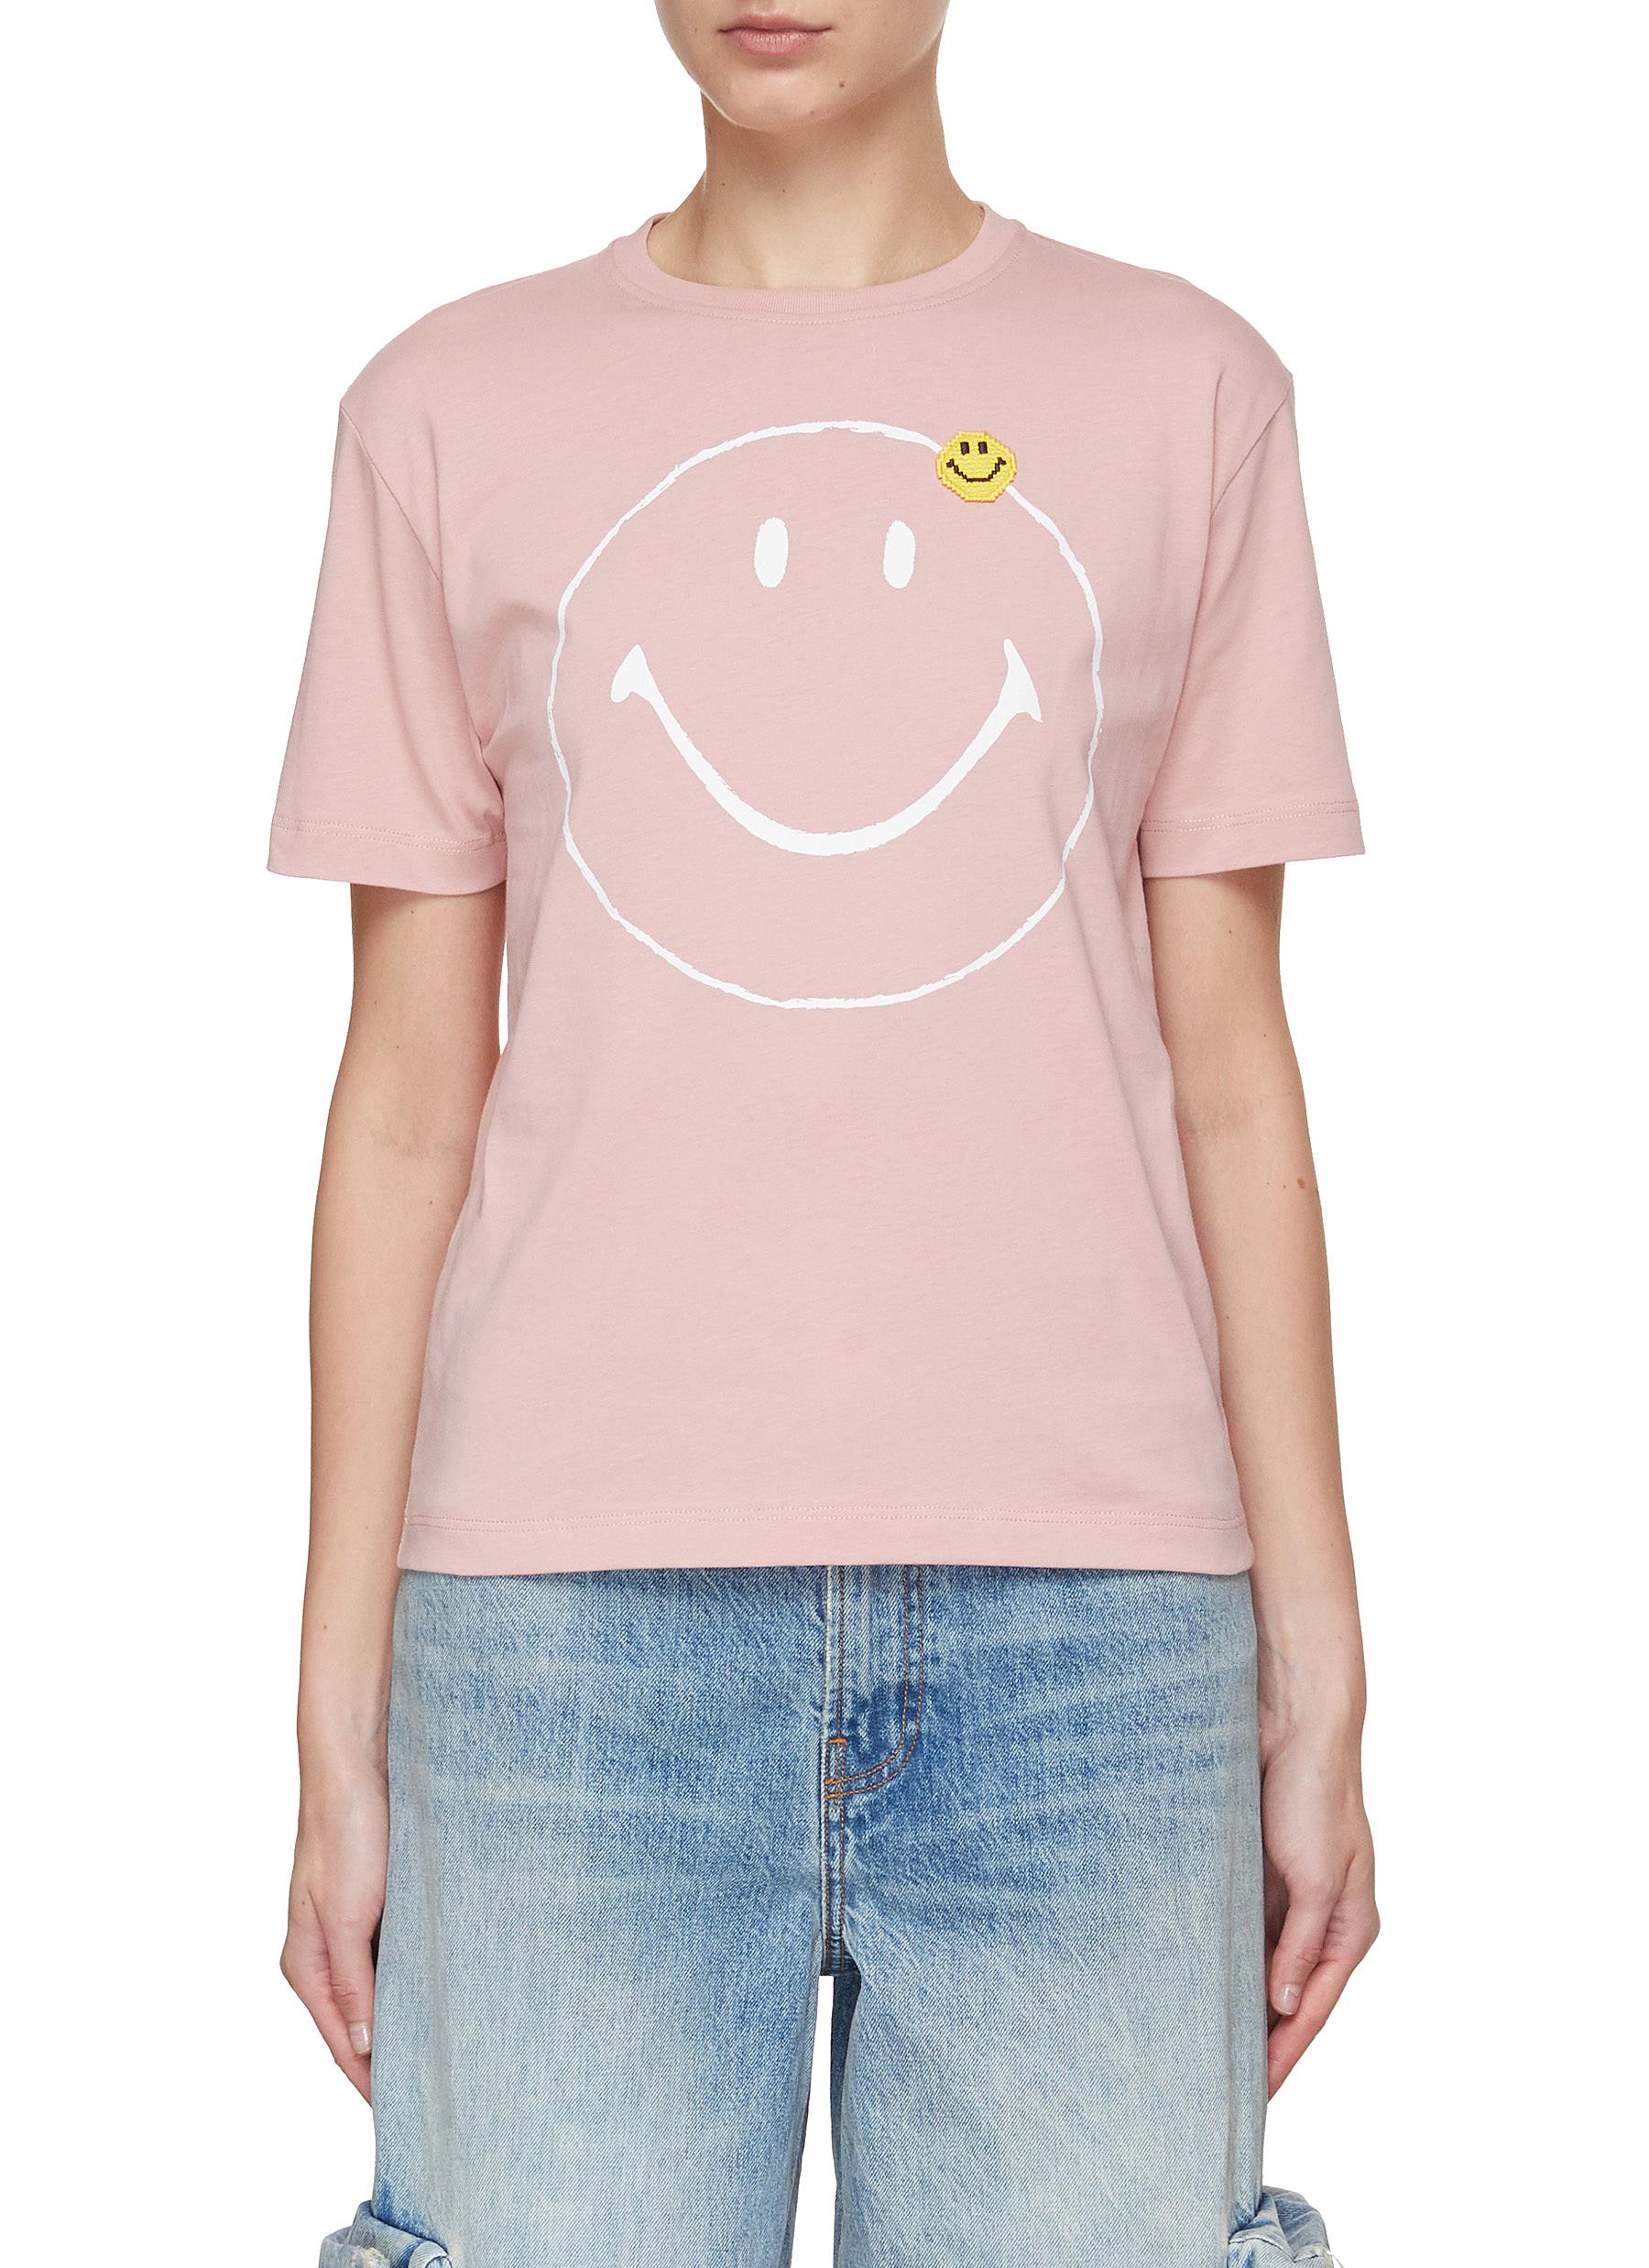 Smiley Face Appliqué T-Shirt